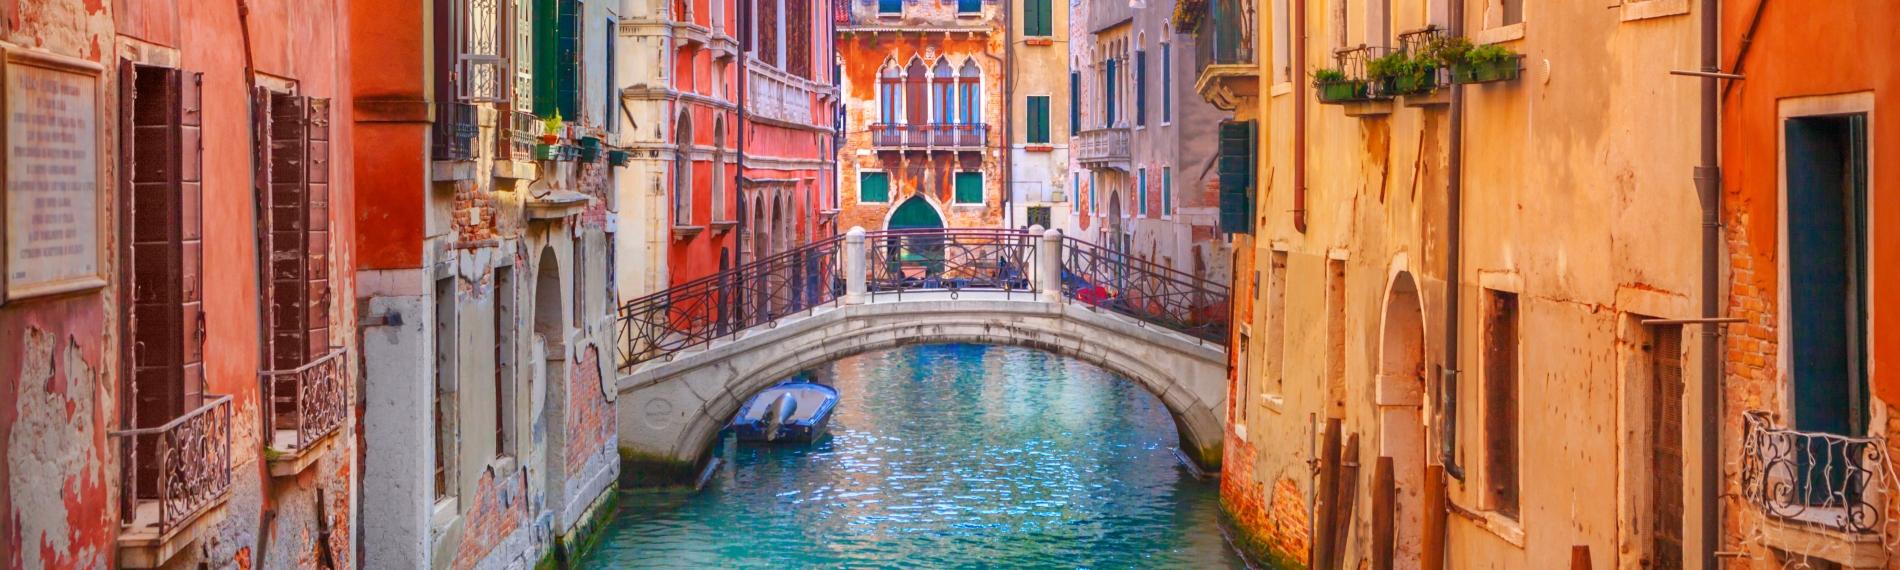 A beautiful street in Venice, Italy